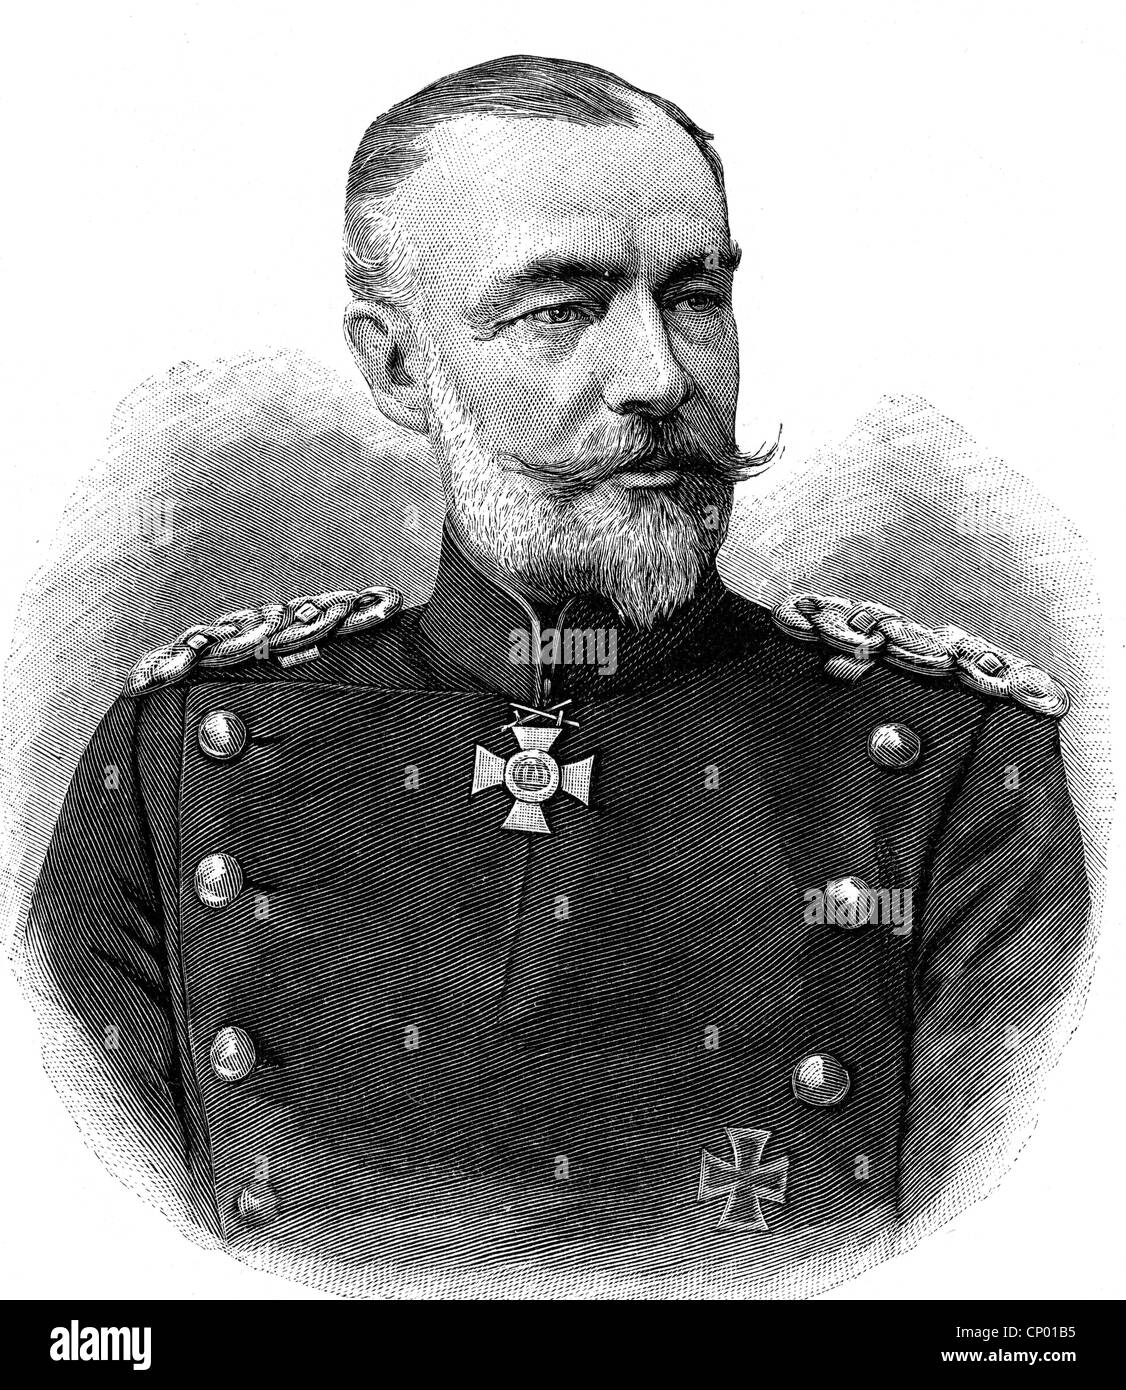 Bronsart von Schellendorff, Walther, 21.12.1833 - 12.12.1914, Prussian general, Minister of War 1893 - 1896, portrait, wood engraving, 1893, Stock Photo